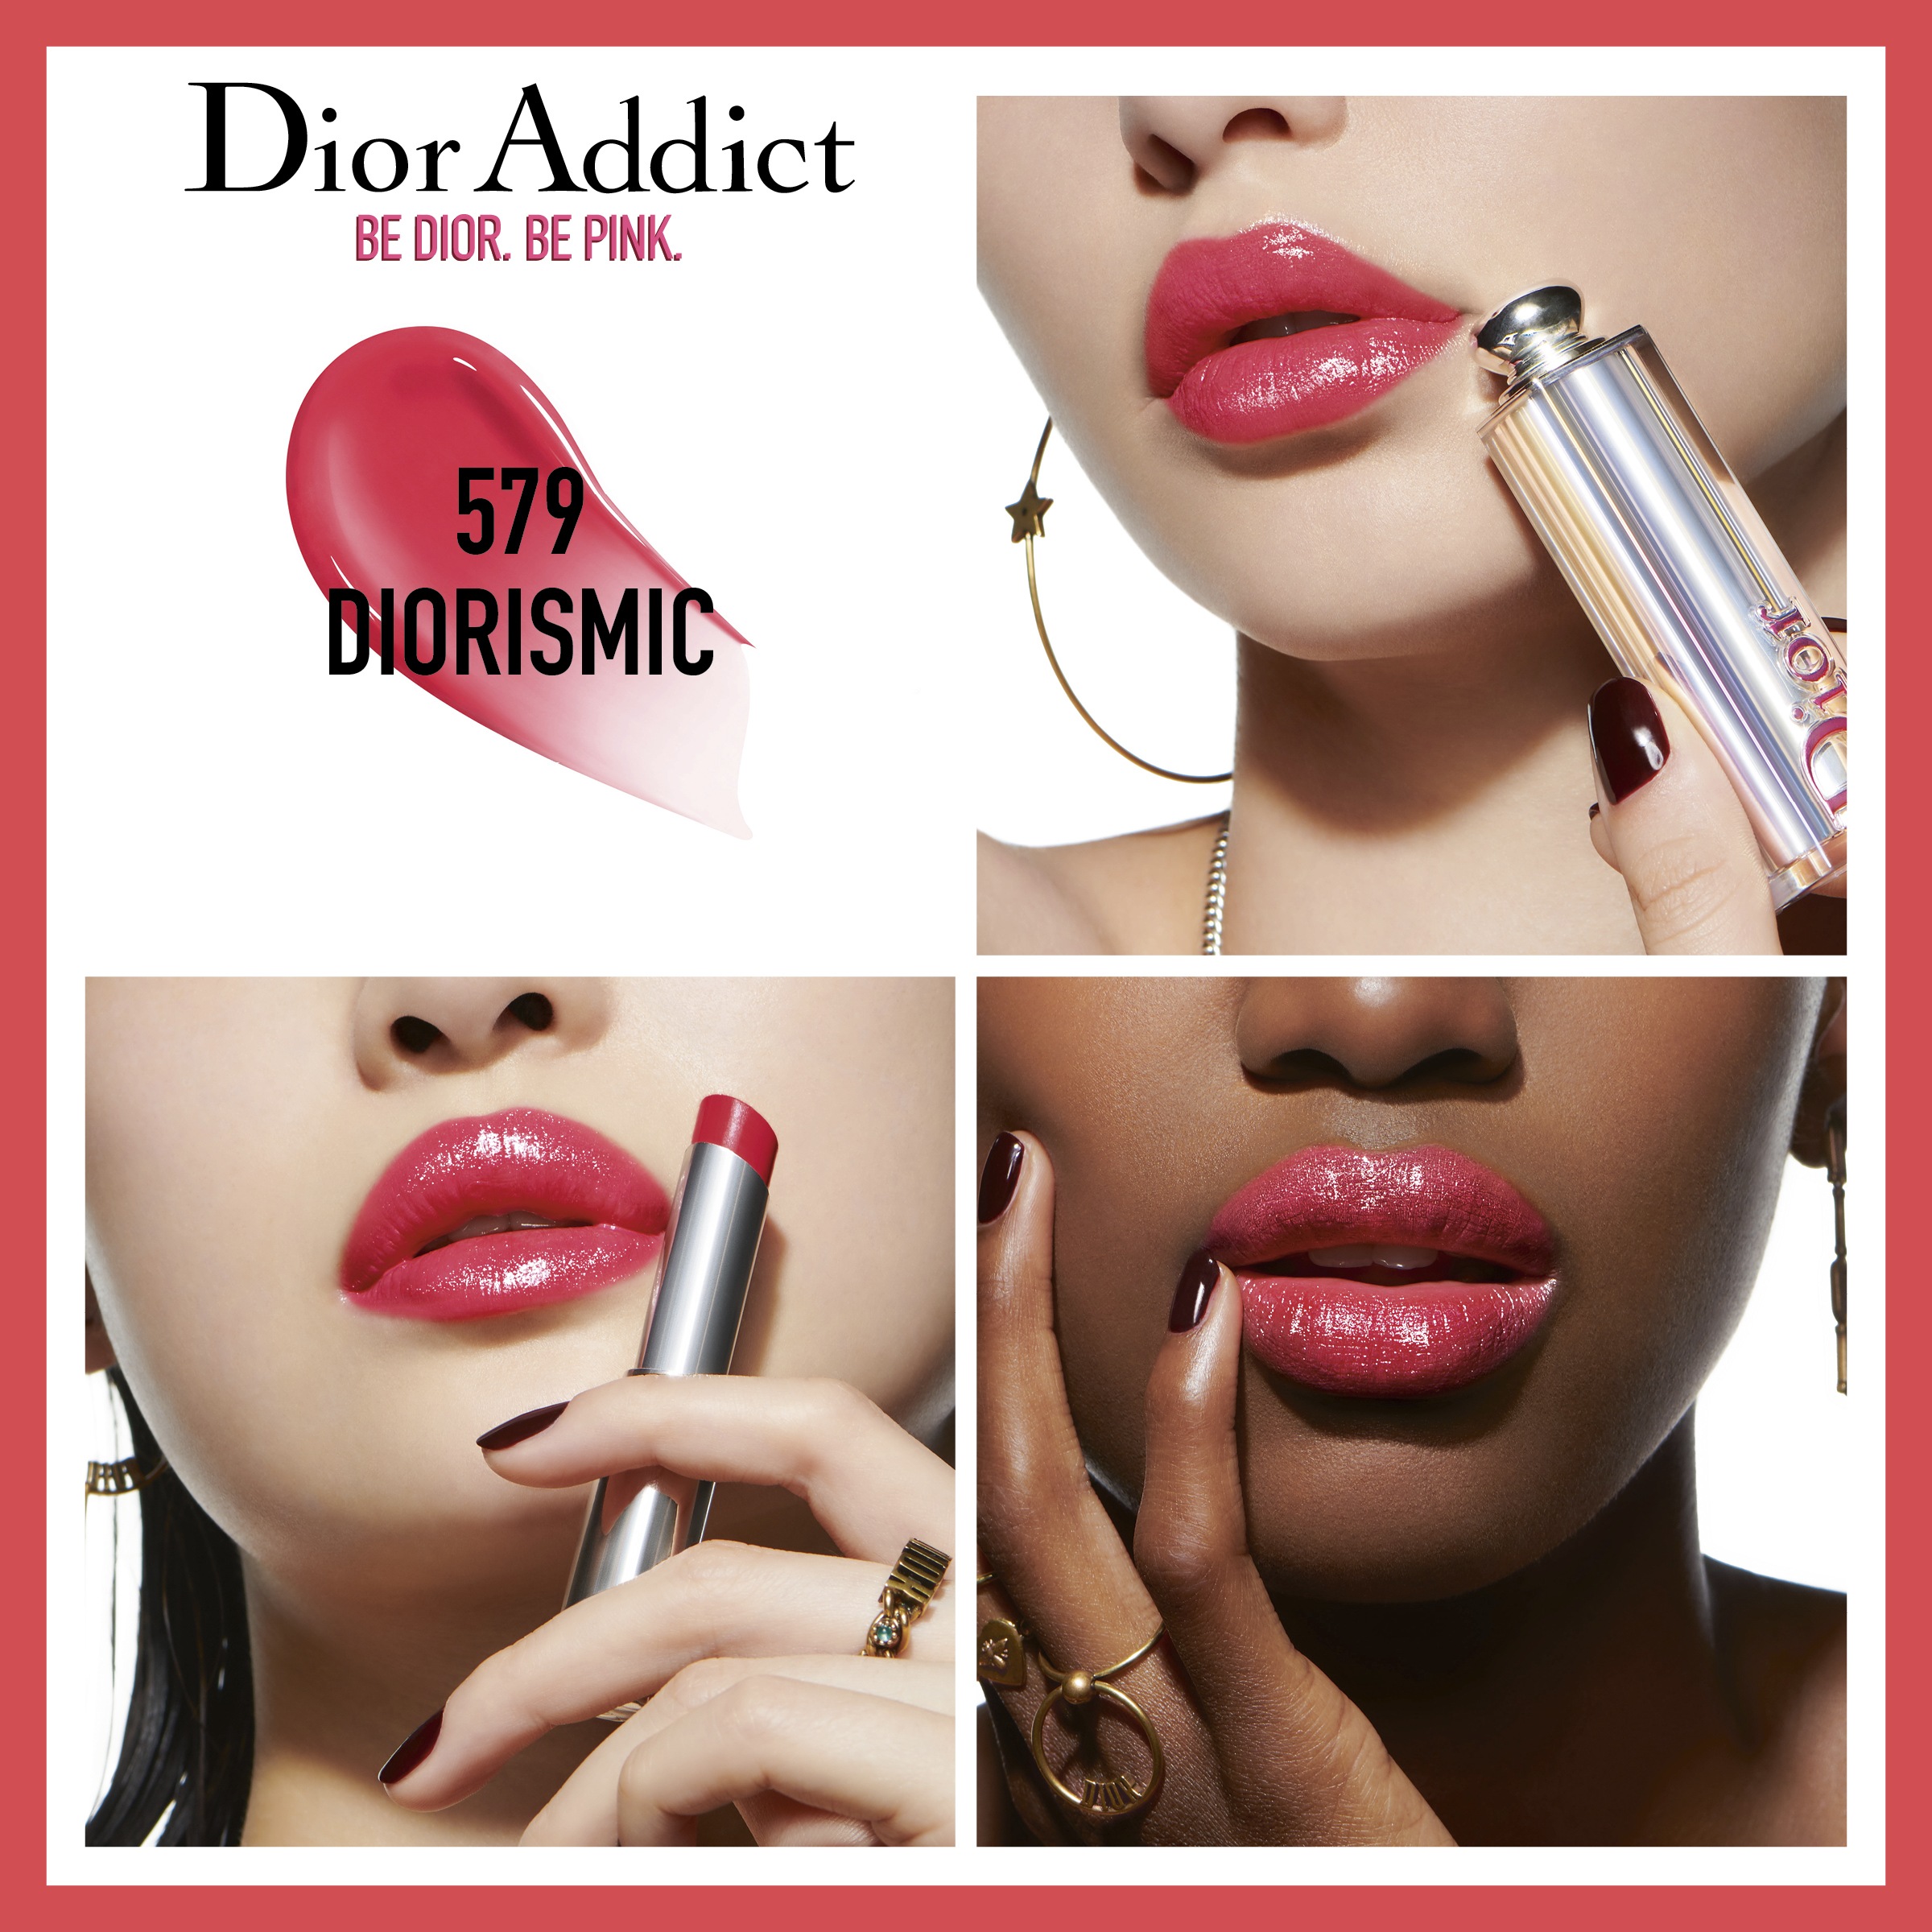 dior 579 lipstick